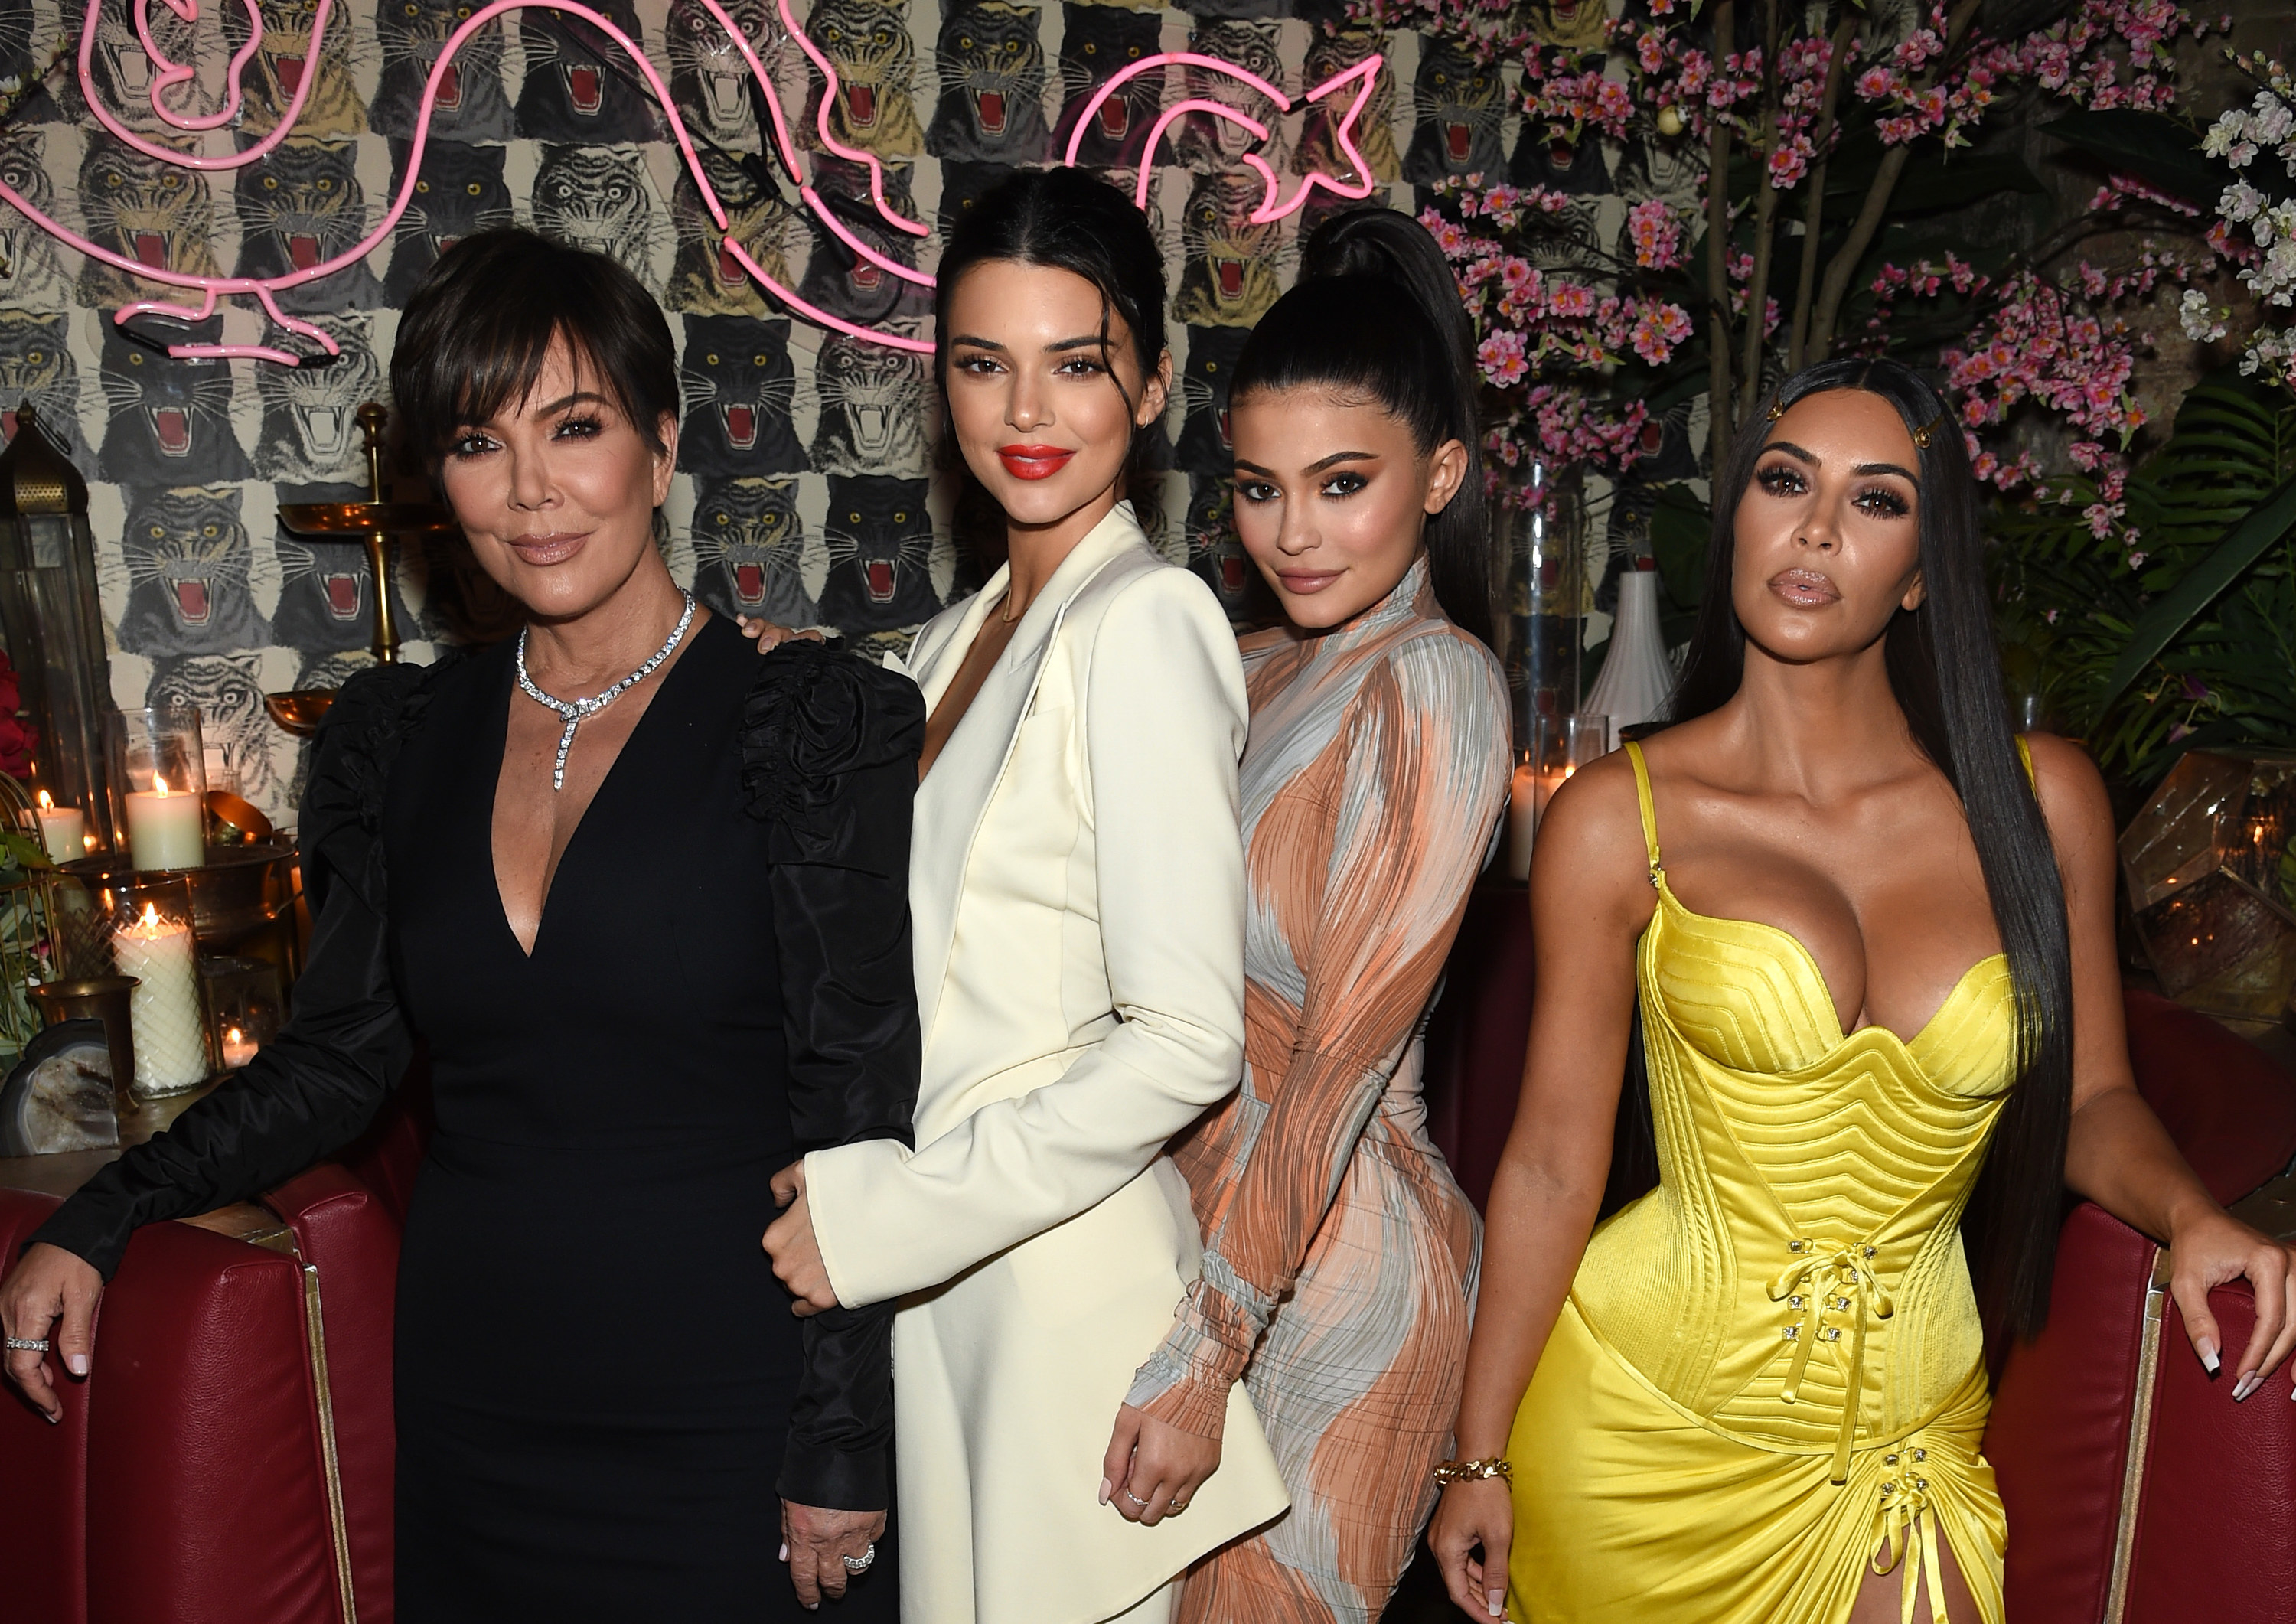 The Kardashians pose together